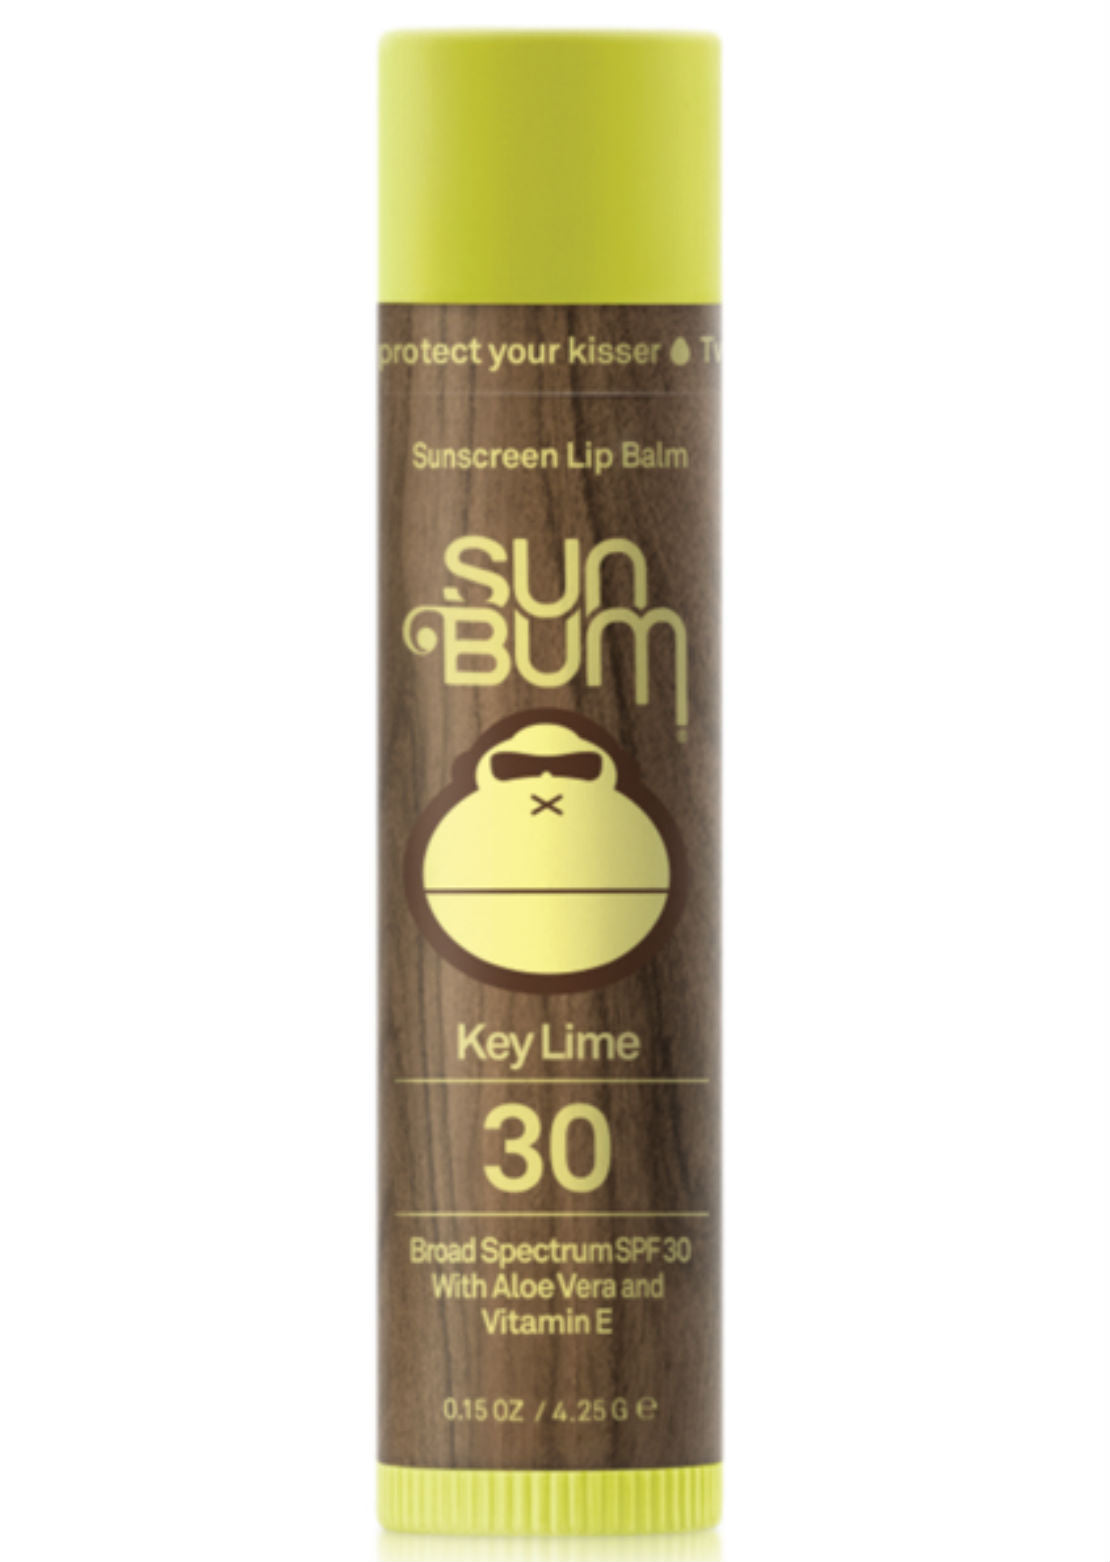 Sun Bum Lip Balm Key Lime SPF 30